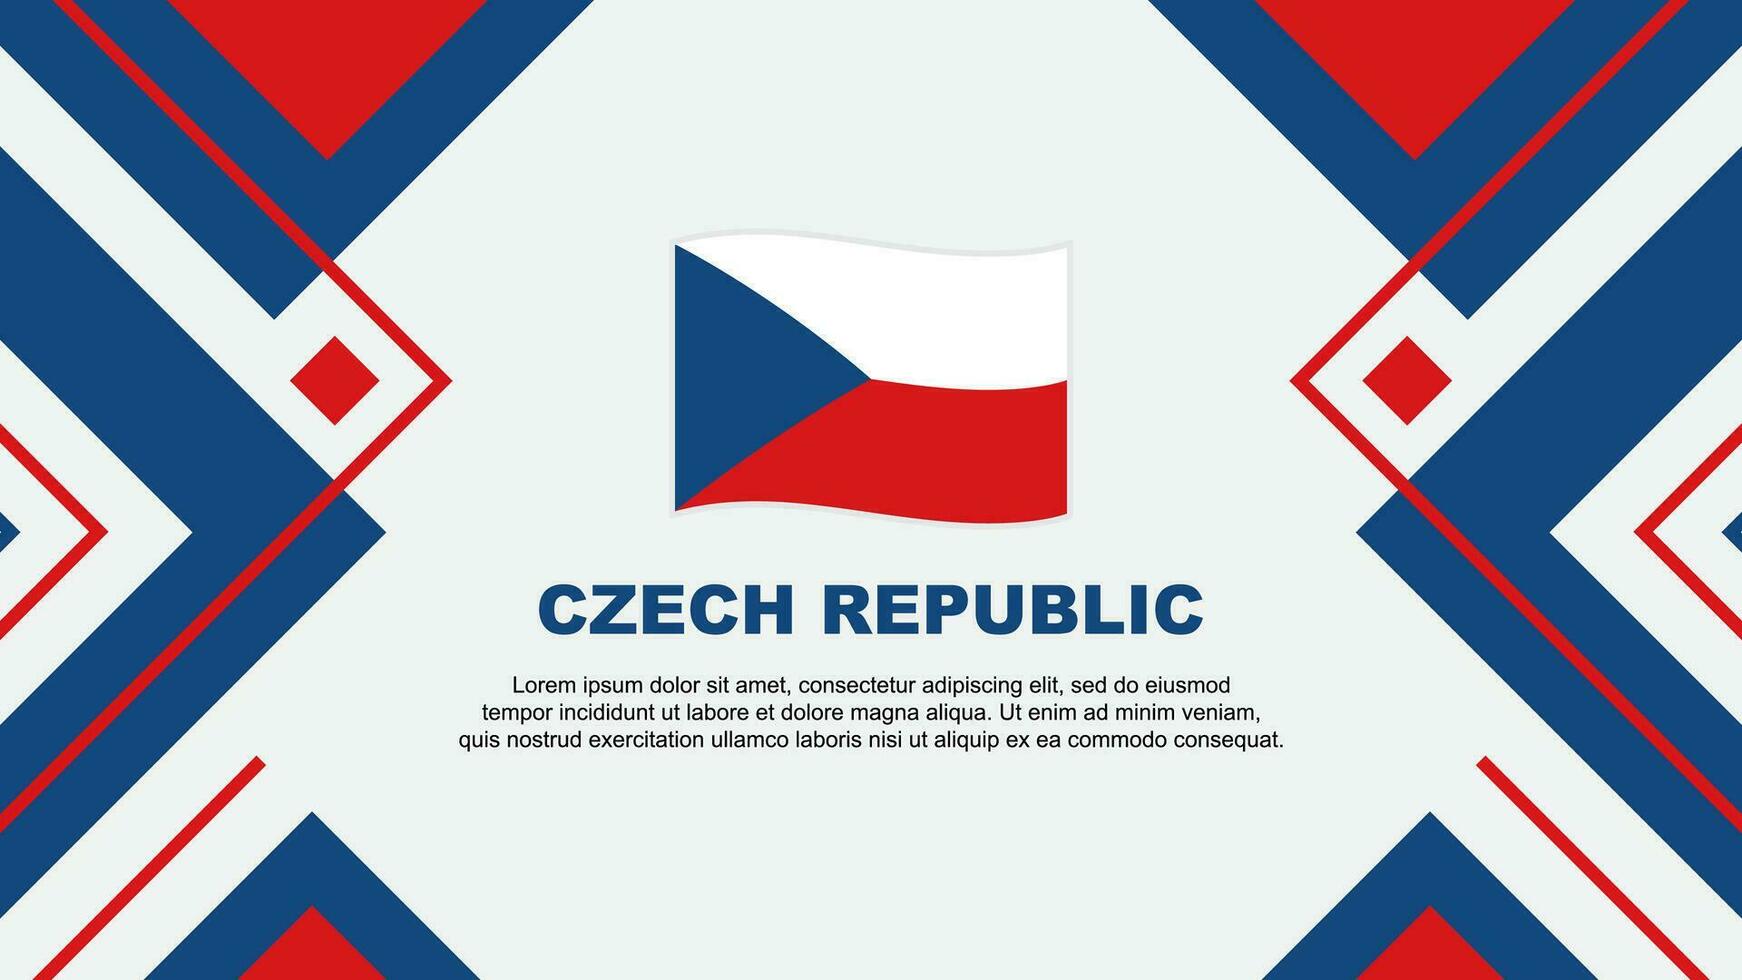 Czech Republic Flag Abstract Background Design Template. Czech Republic Independence Day Banner Wallpaper Vector Illustration. Czech Republic Illustration